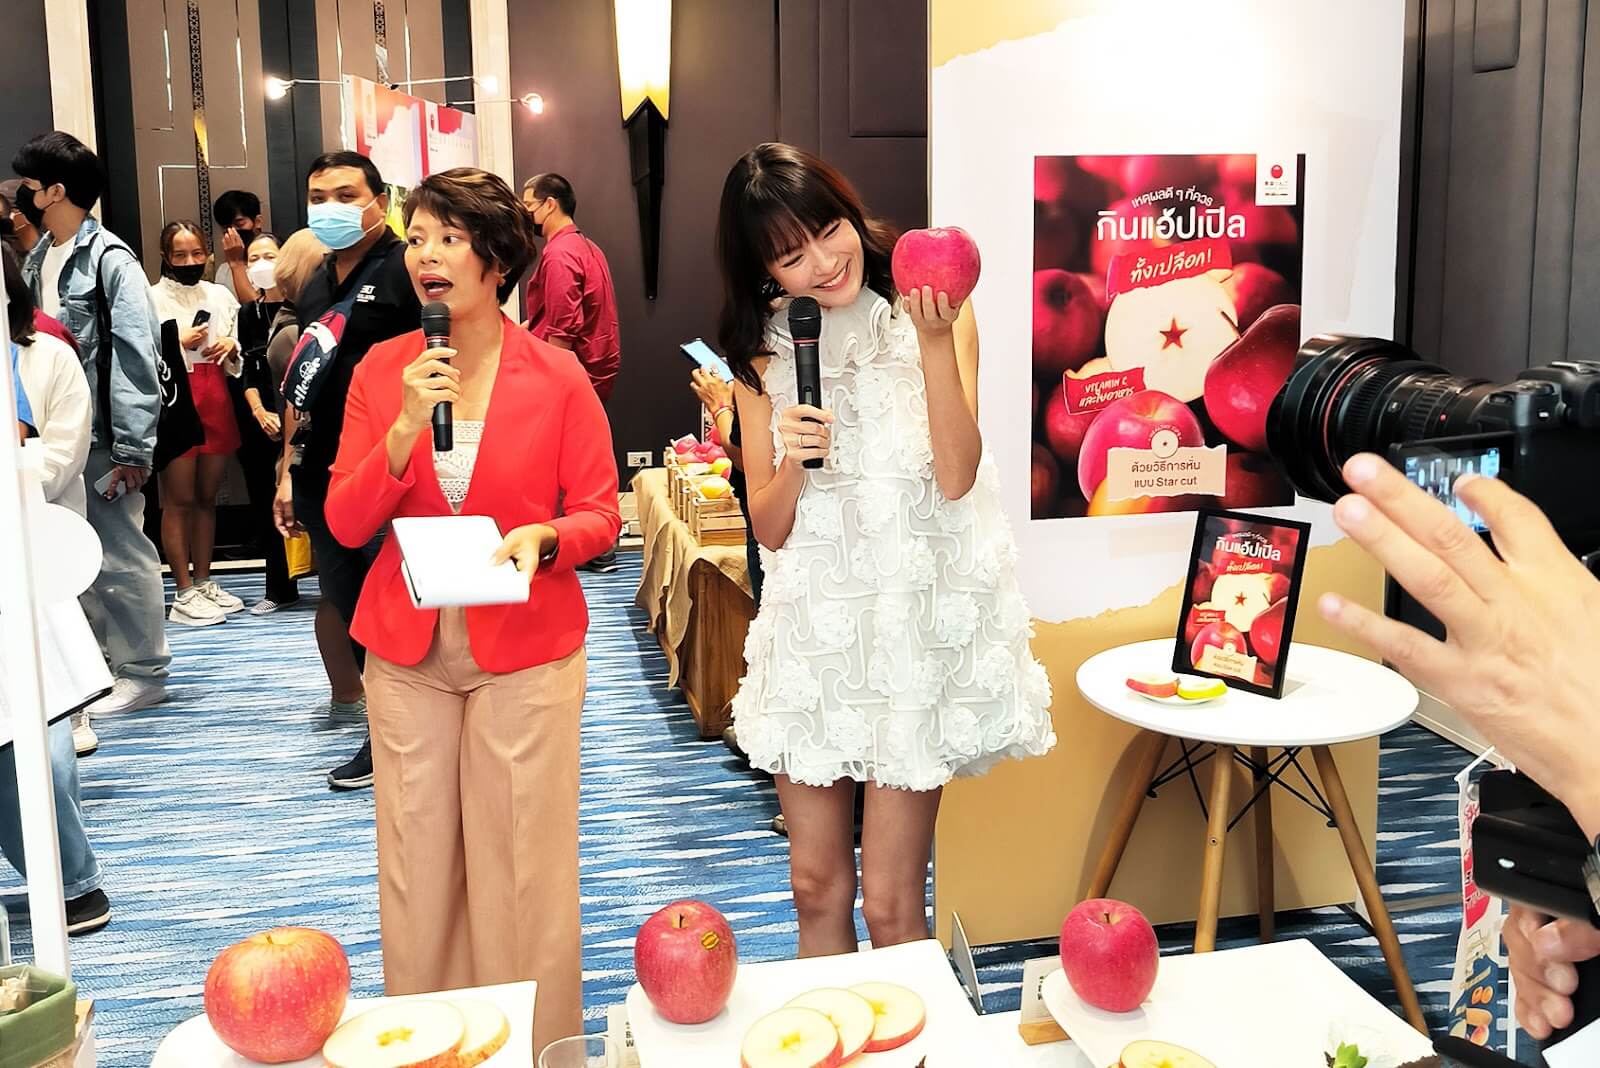 Selamat datang di musim apel Aomori. Pattie mengundang masyarakat Thailand untuk mencoba apel terbaik Jepang!